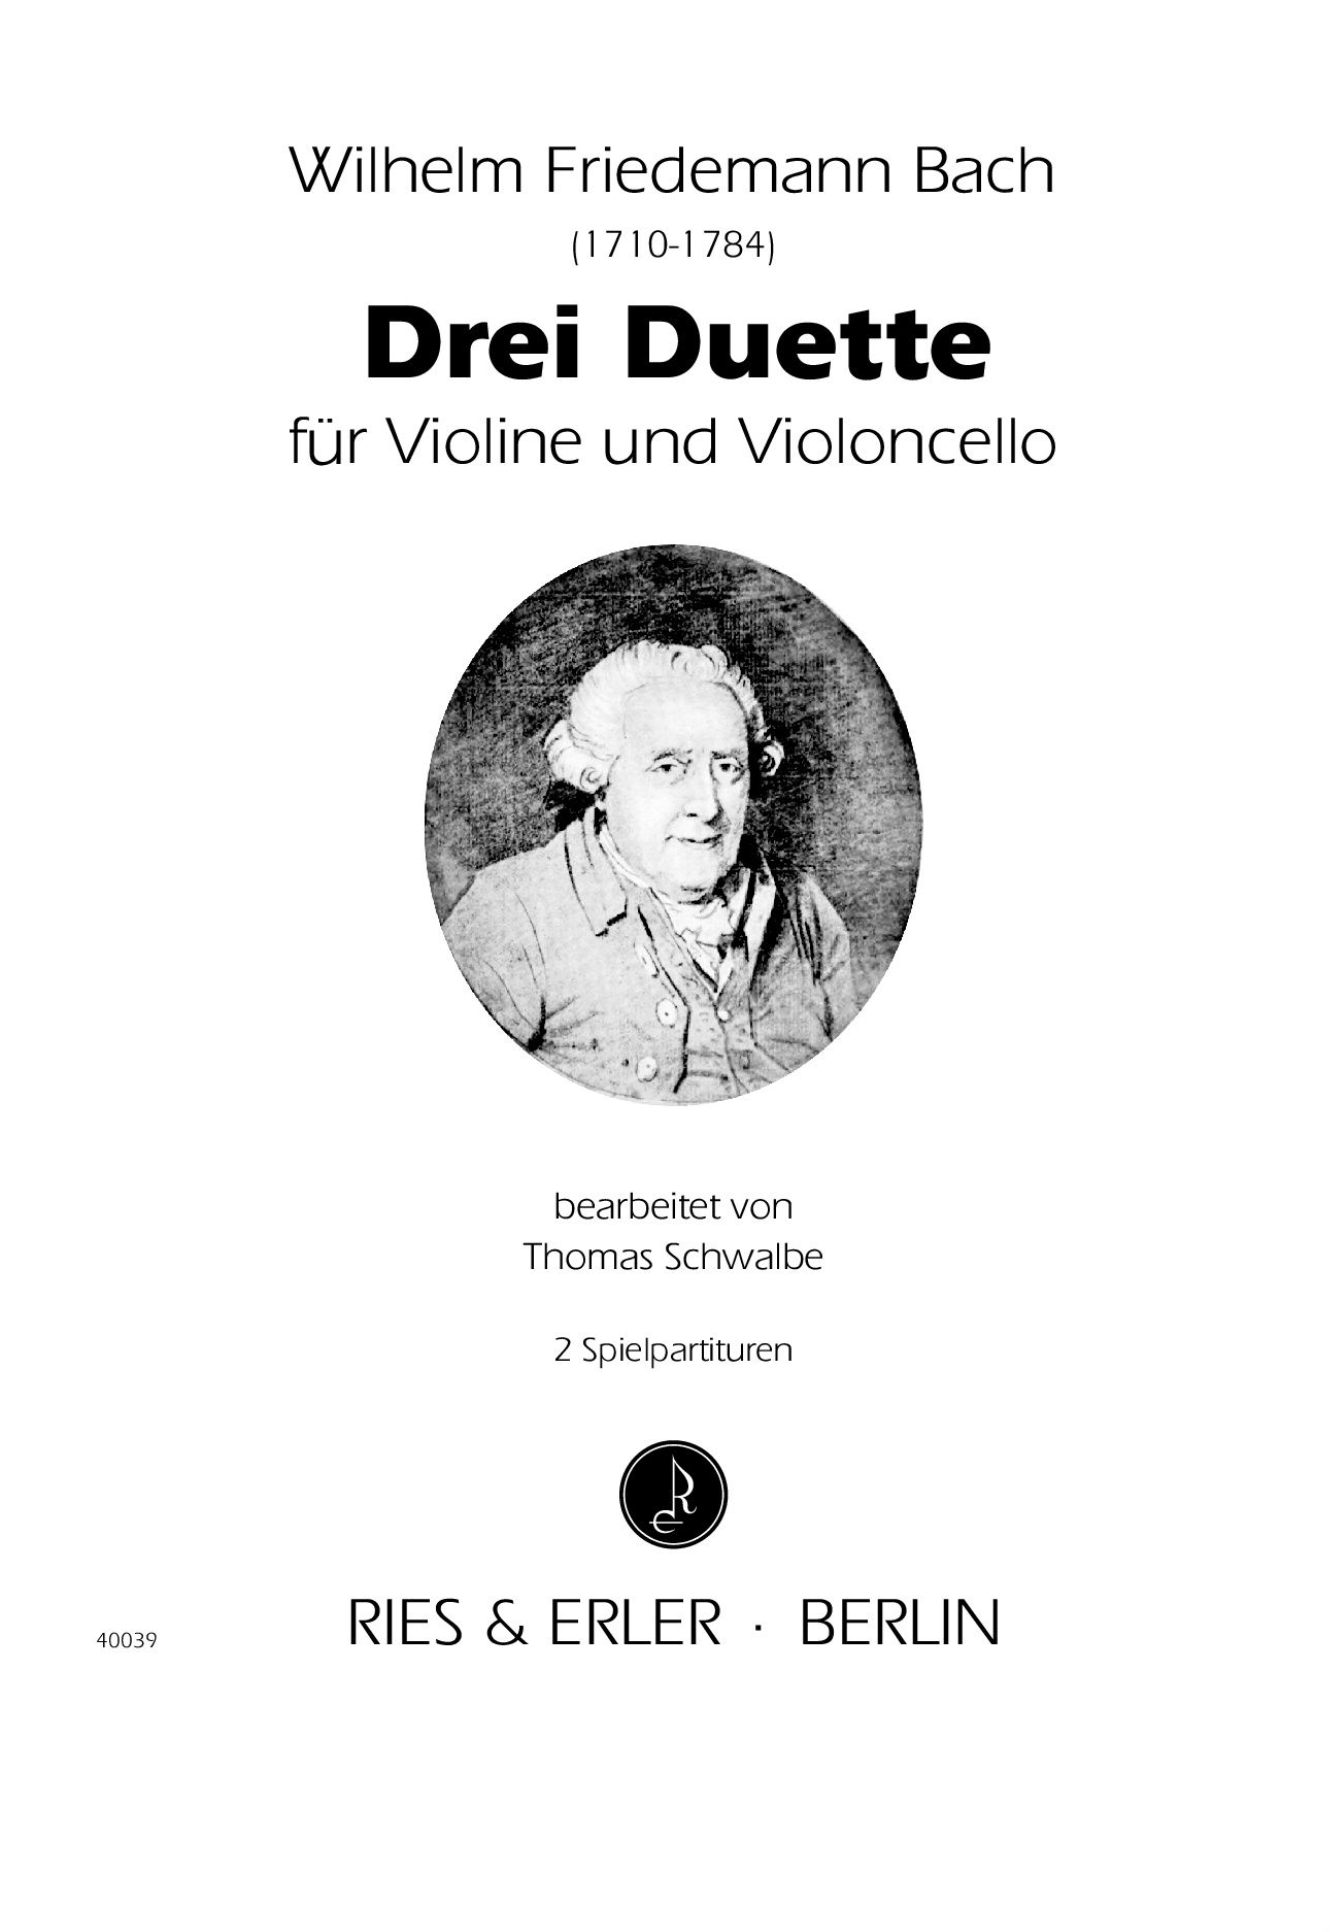 Ries & Erler Bach WF: Drei Duette (violin and cello) RE